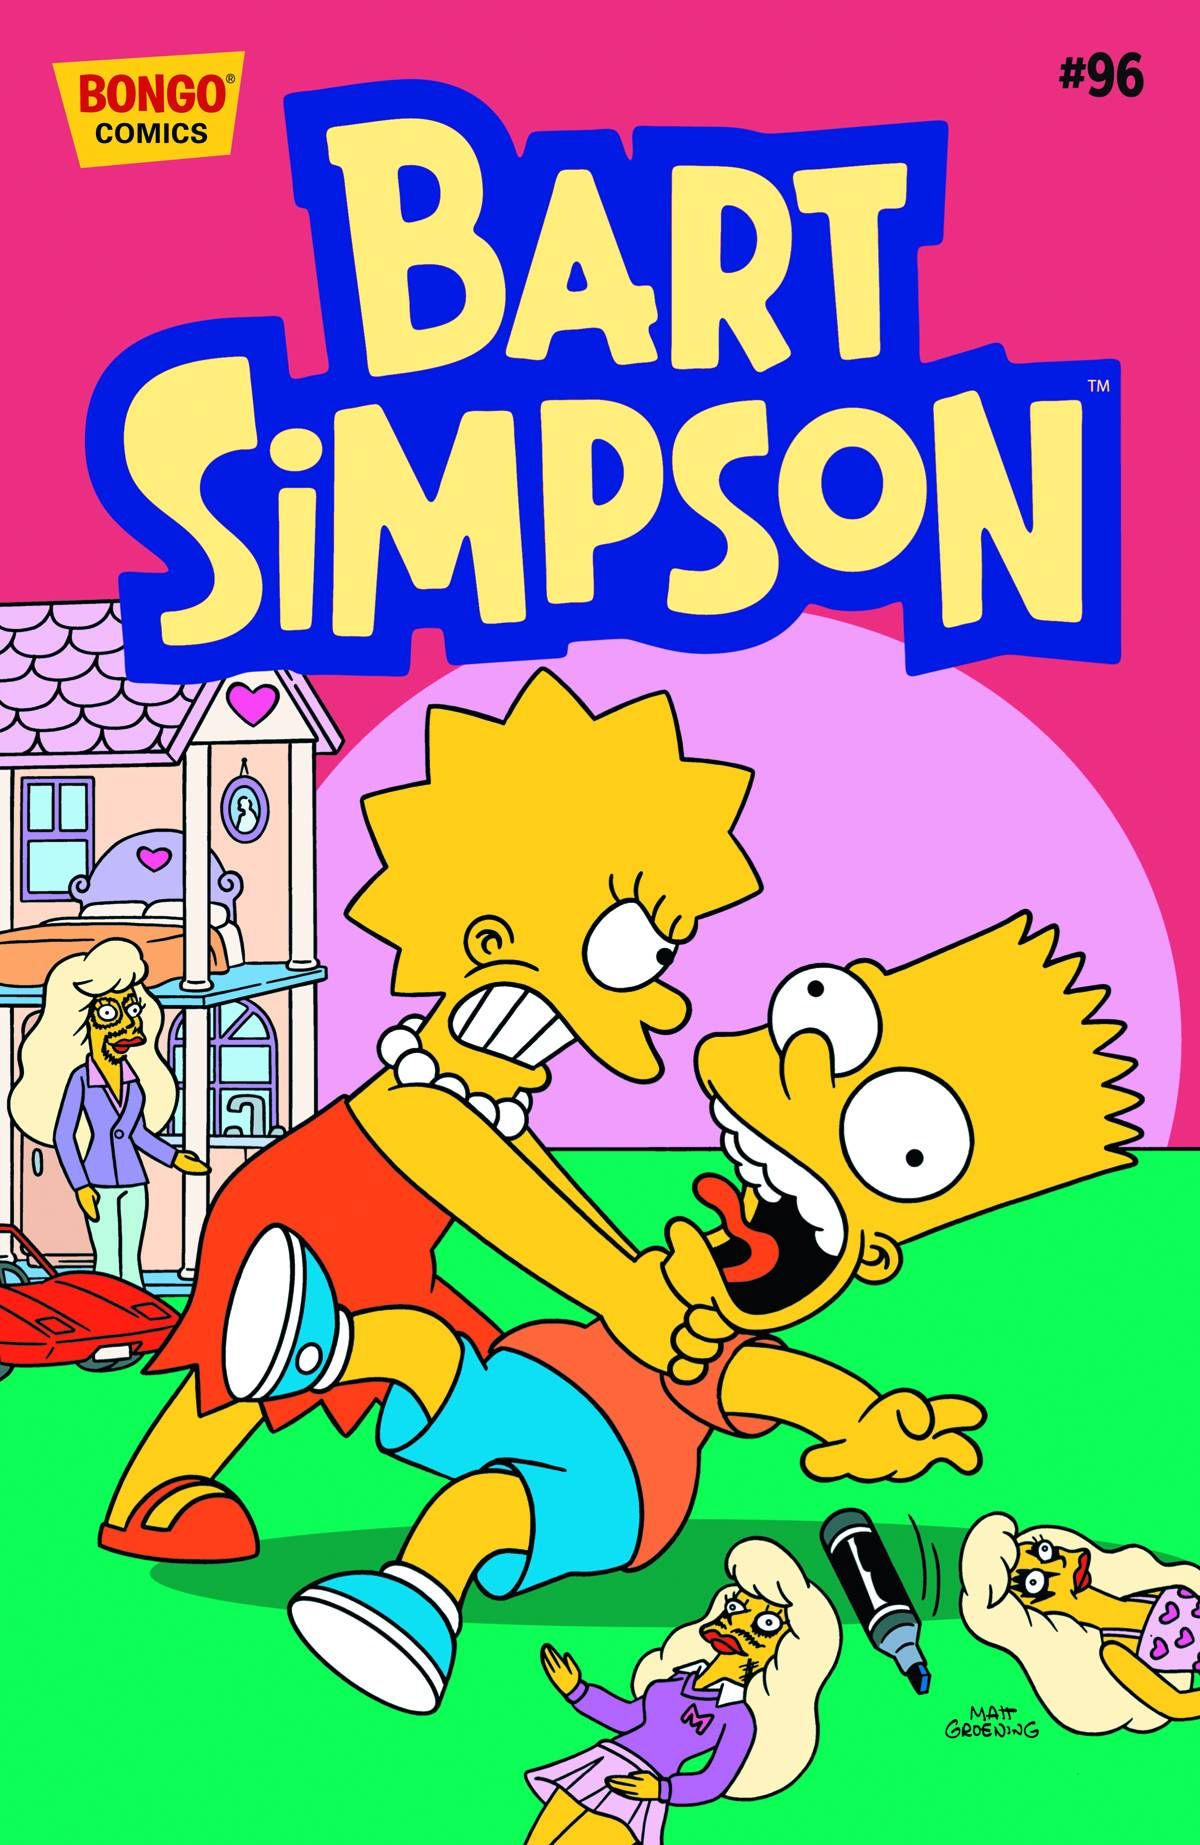 Simpsons Comics Presents Bart Simpson #96 Comic